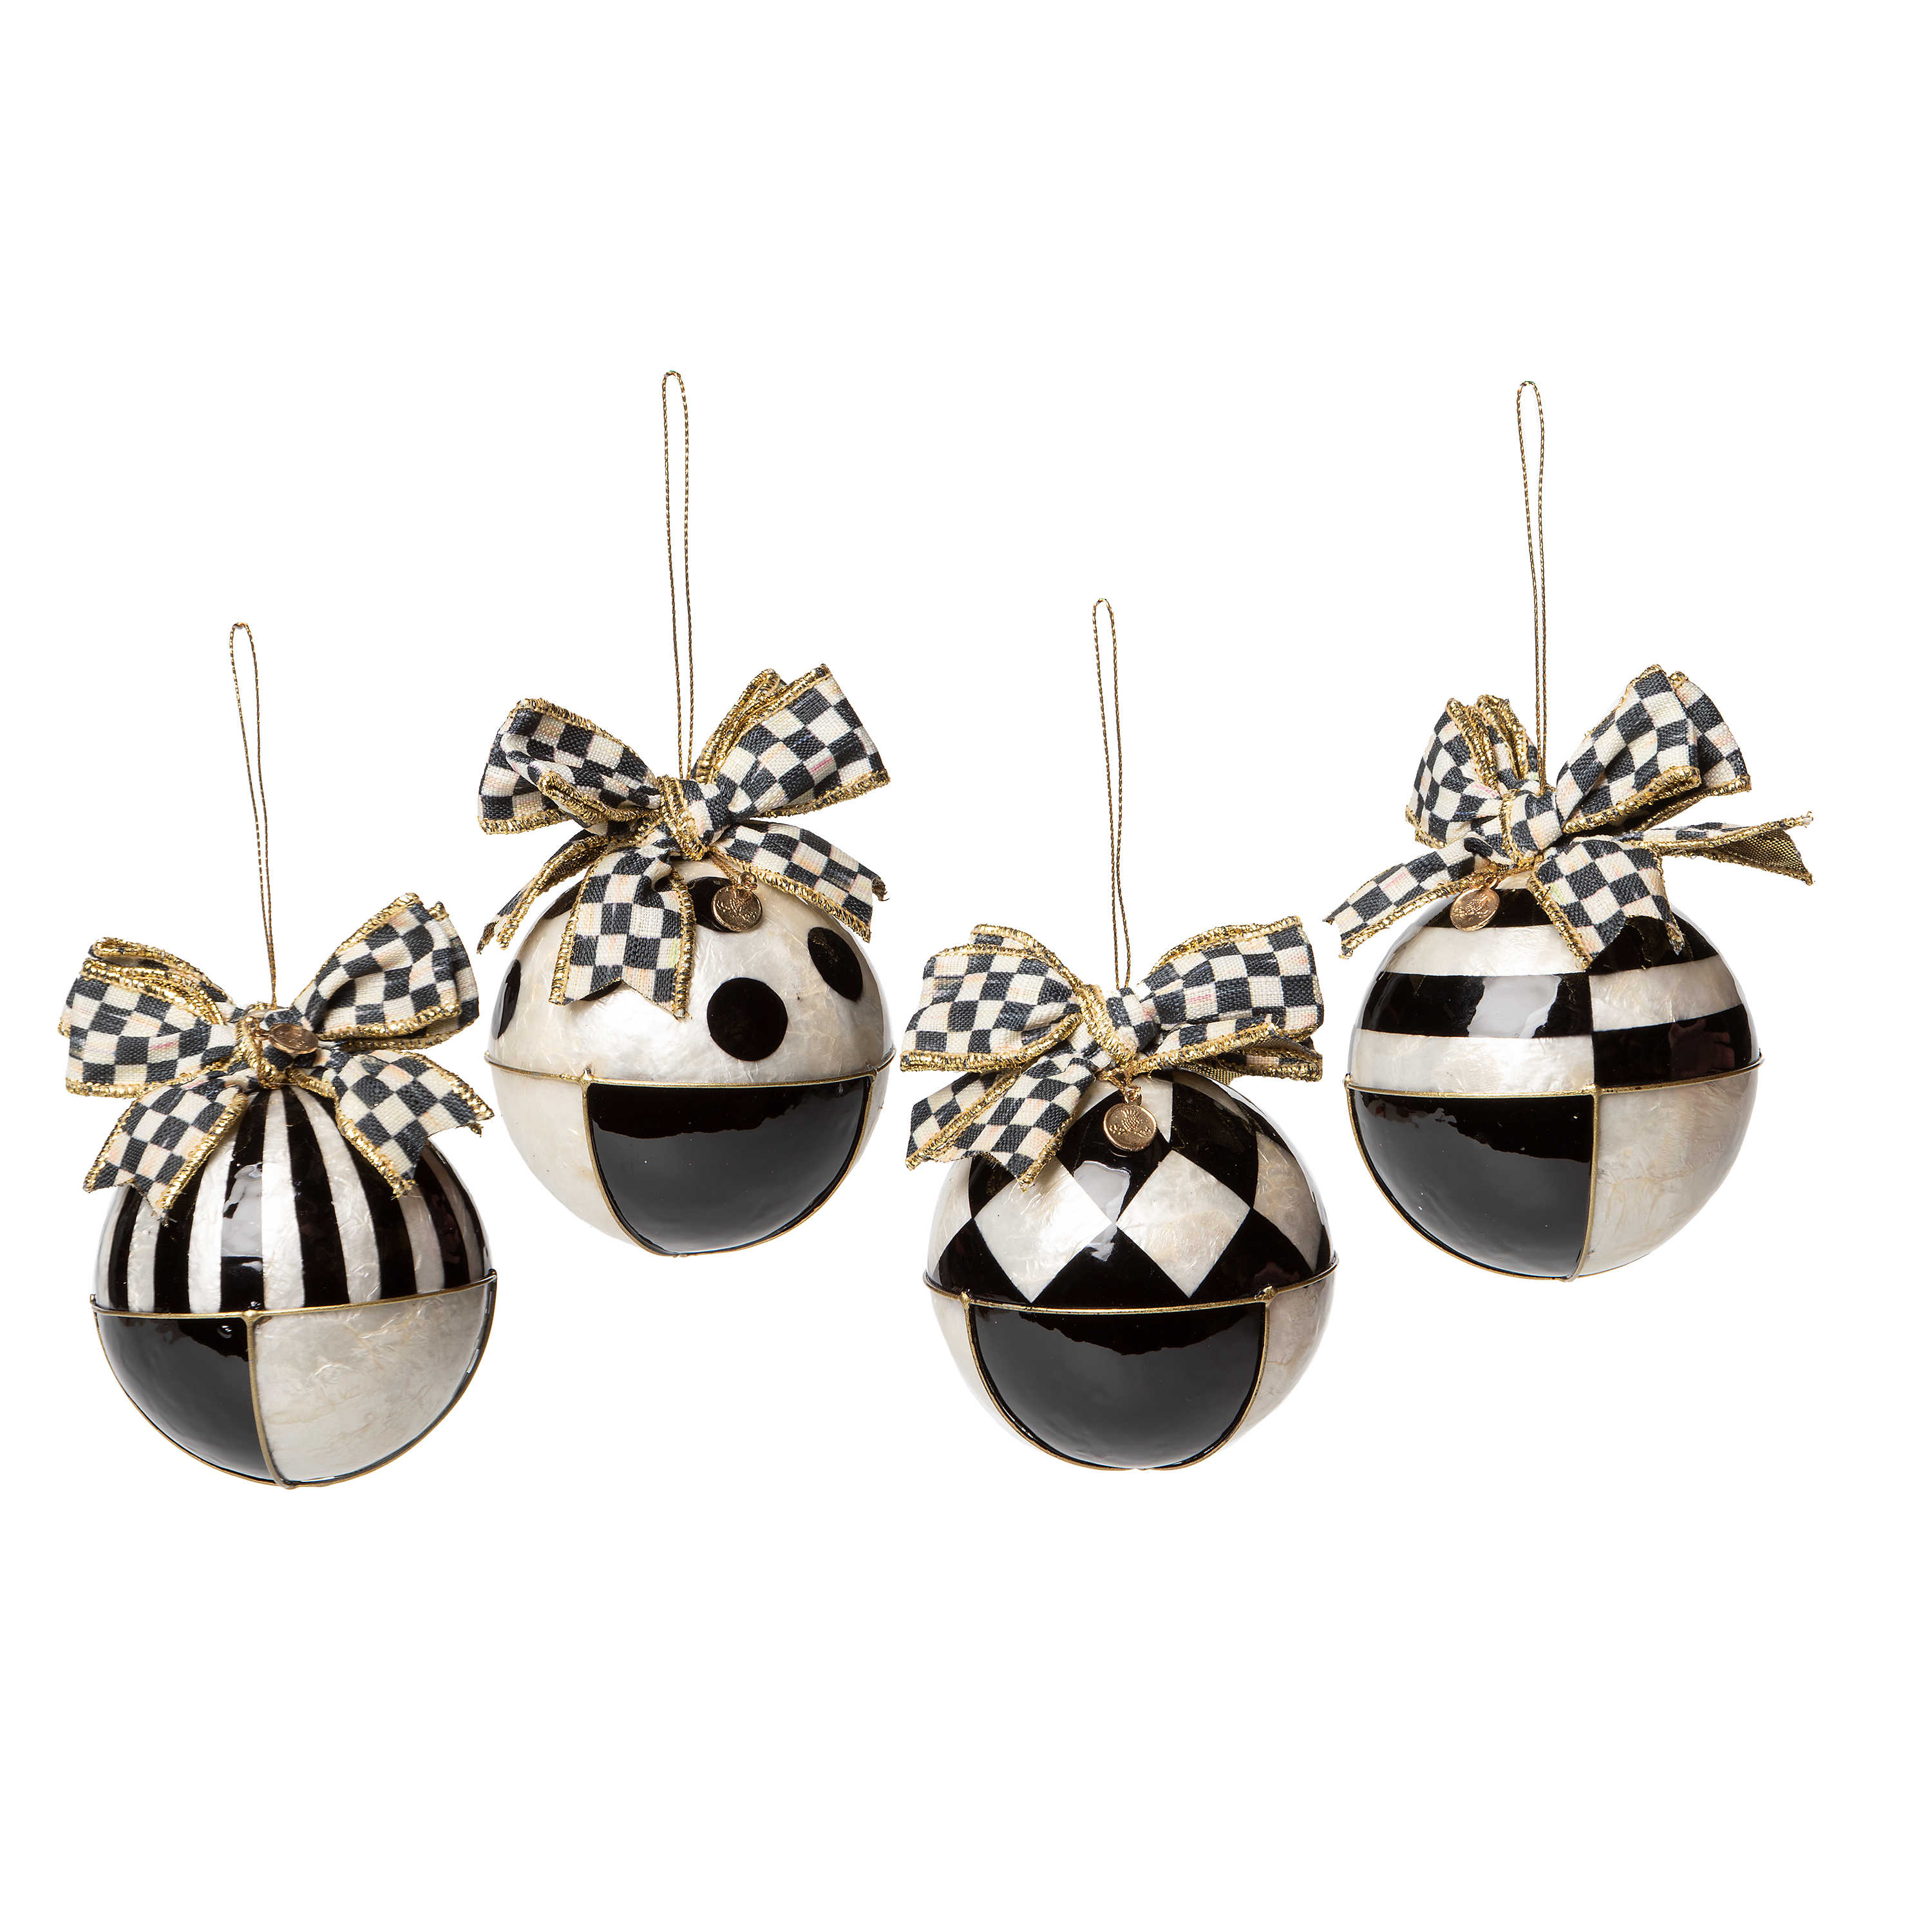 Checkmate Geo Capiz Ball Ornaments - Set of 4 mackenzie-childs Panama 0